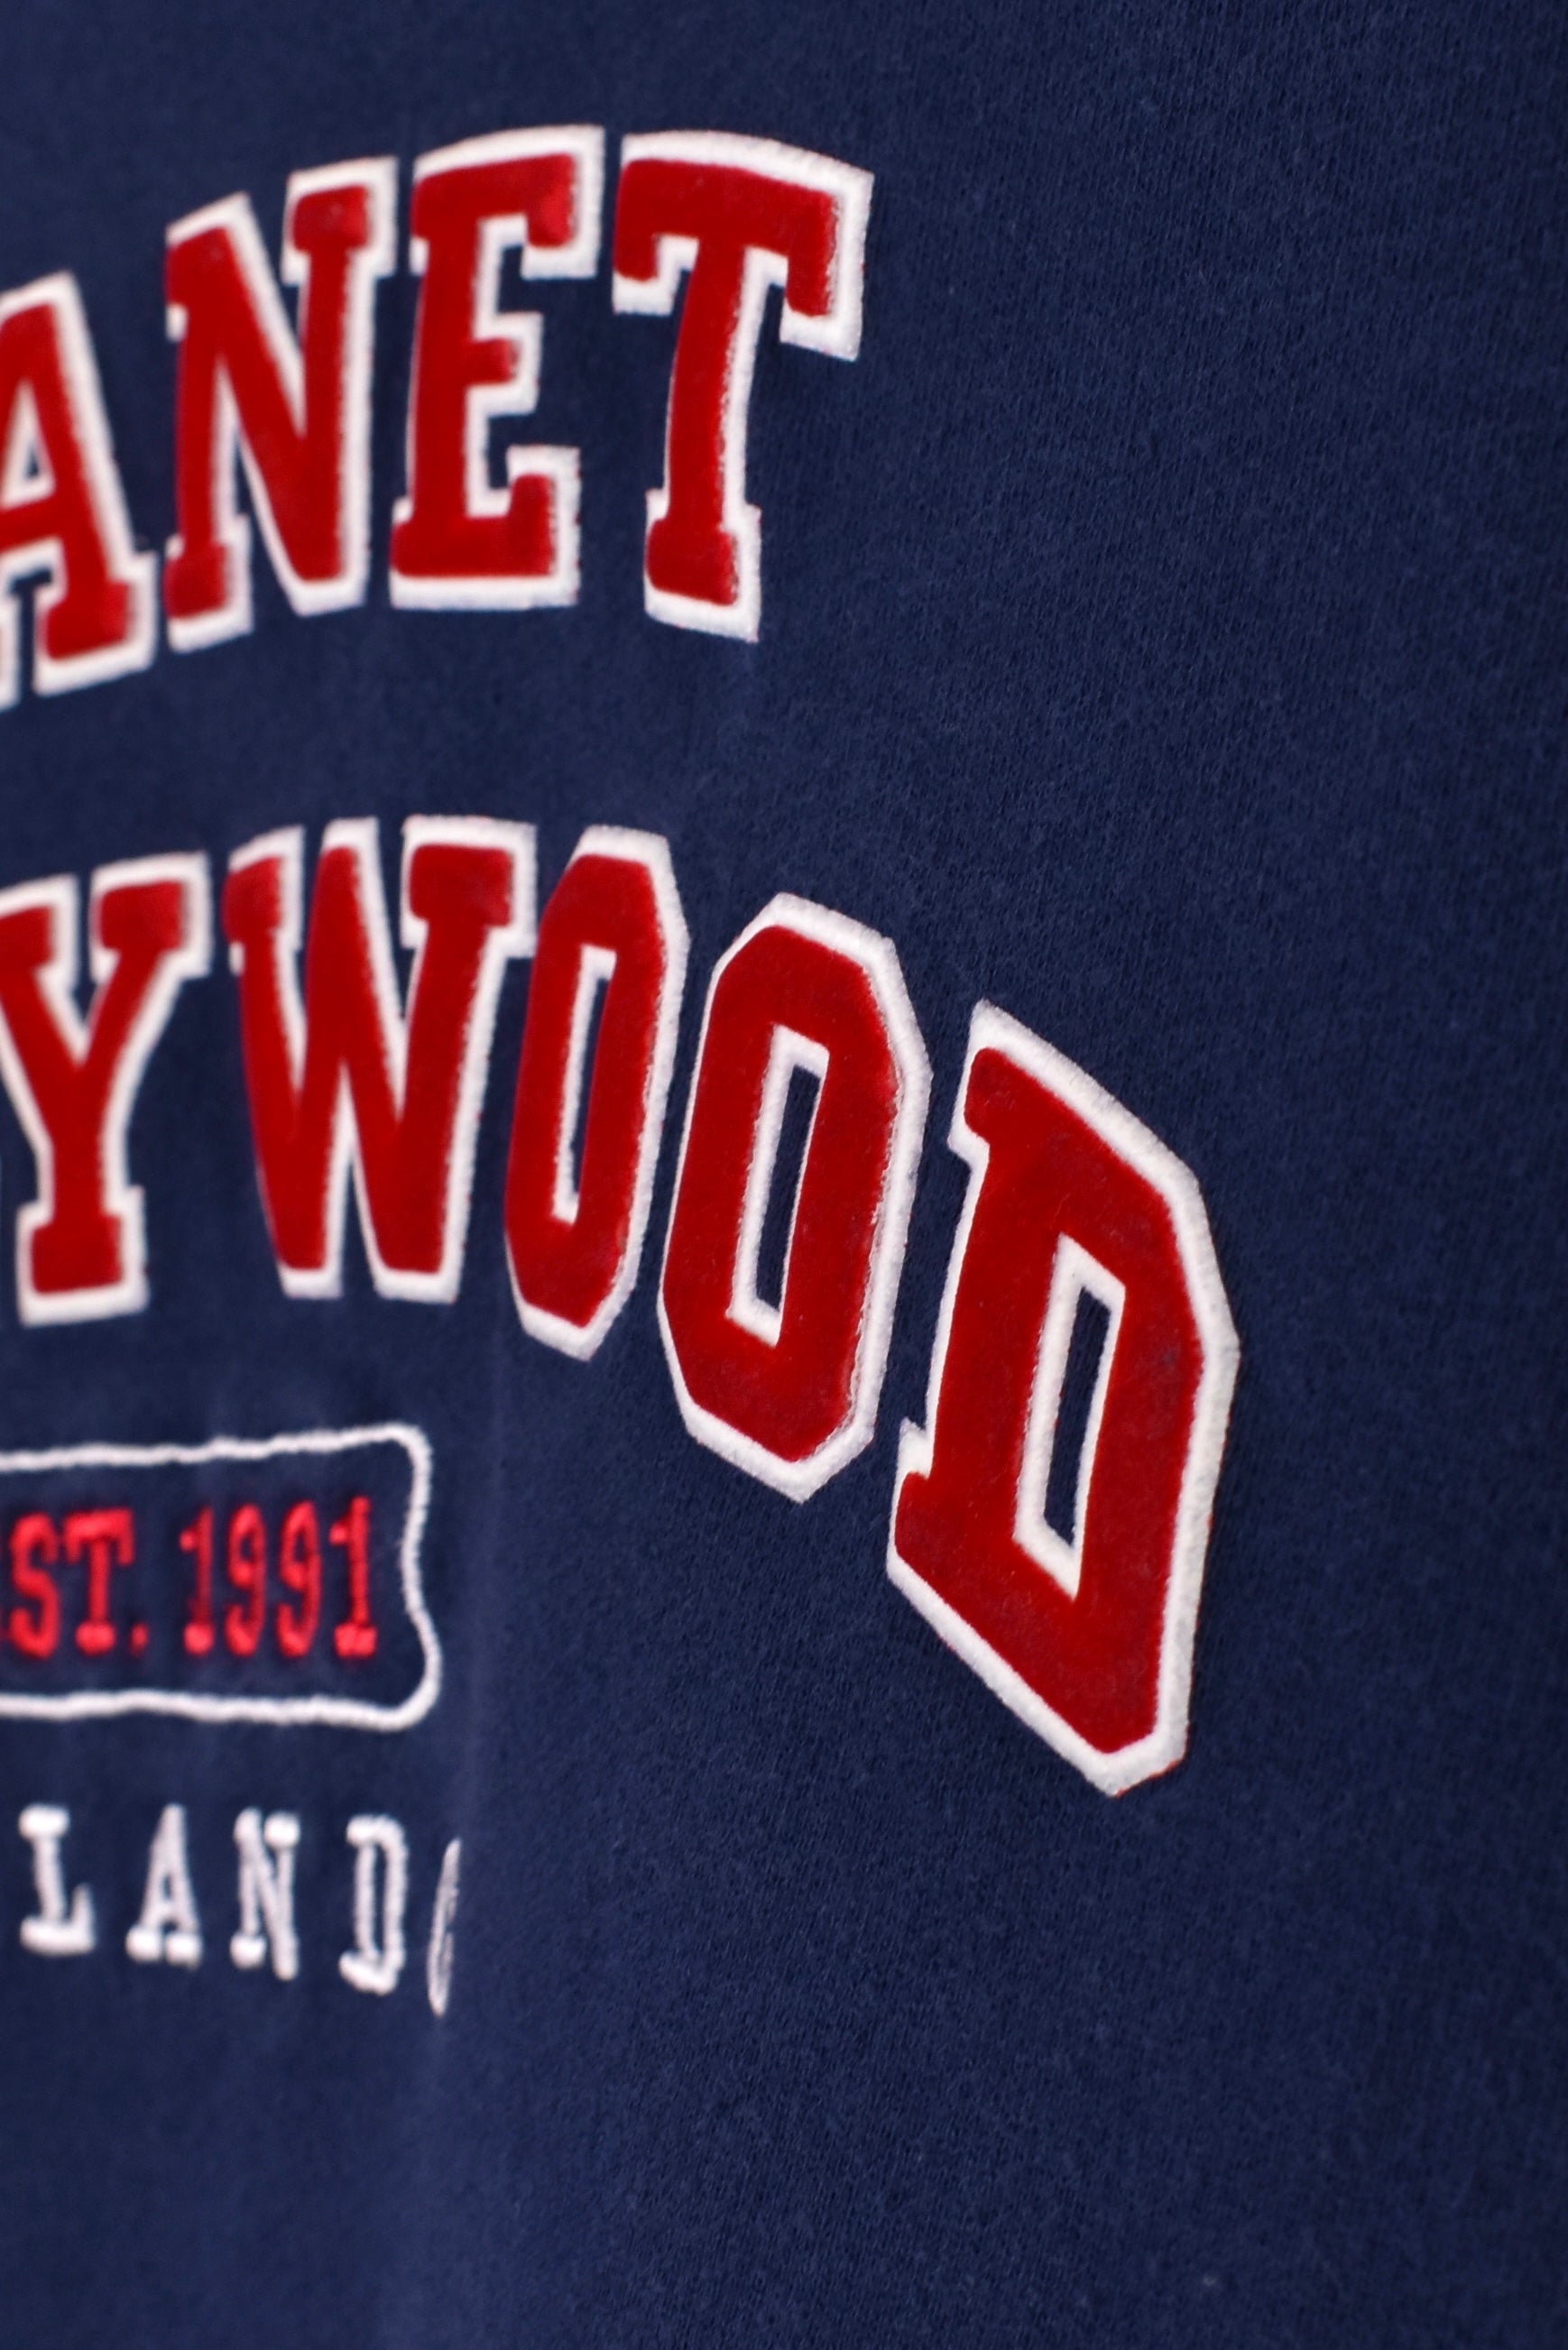 Vintage 1998 Planet Hollywood sweatshirt, navy embroidered crewneck - XL